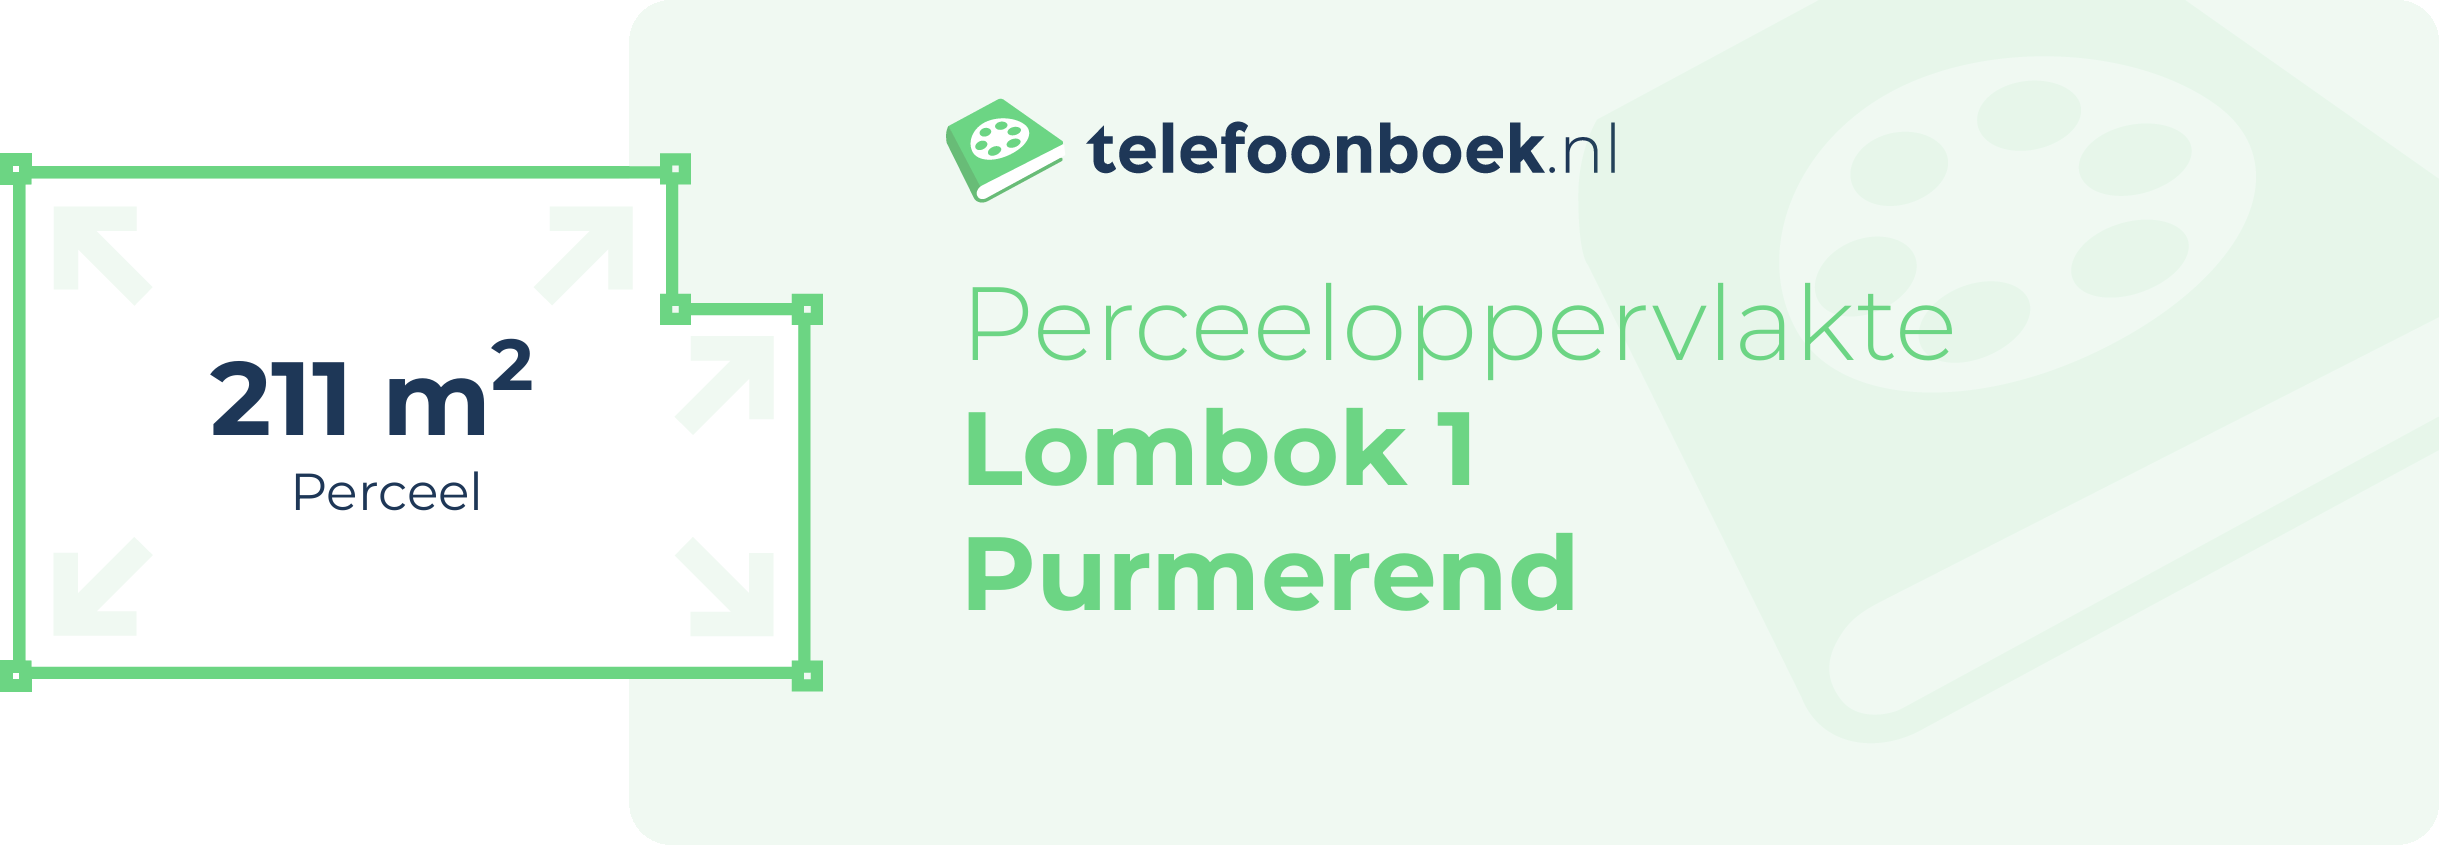 Perceeloppervlakte Lombok 1 Purmerend